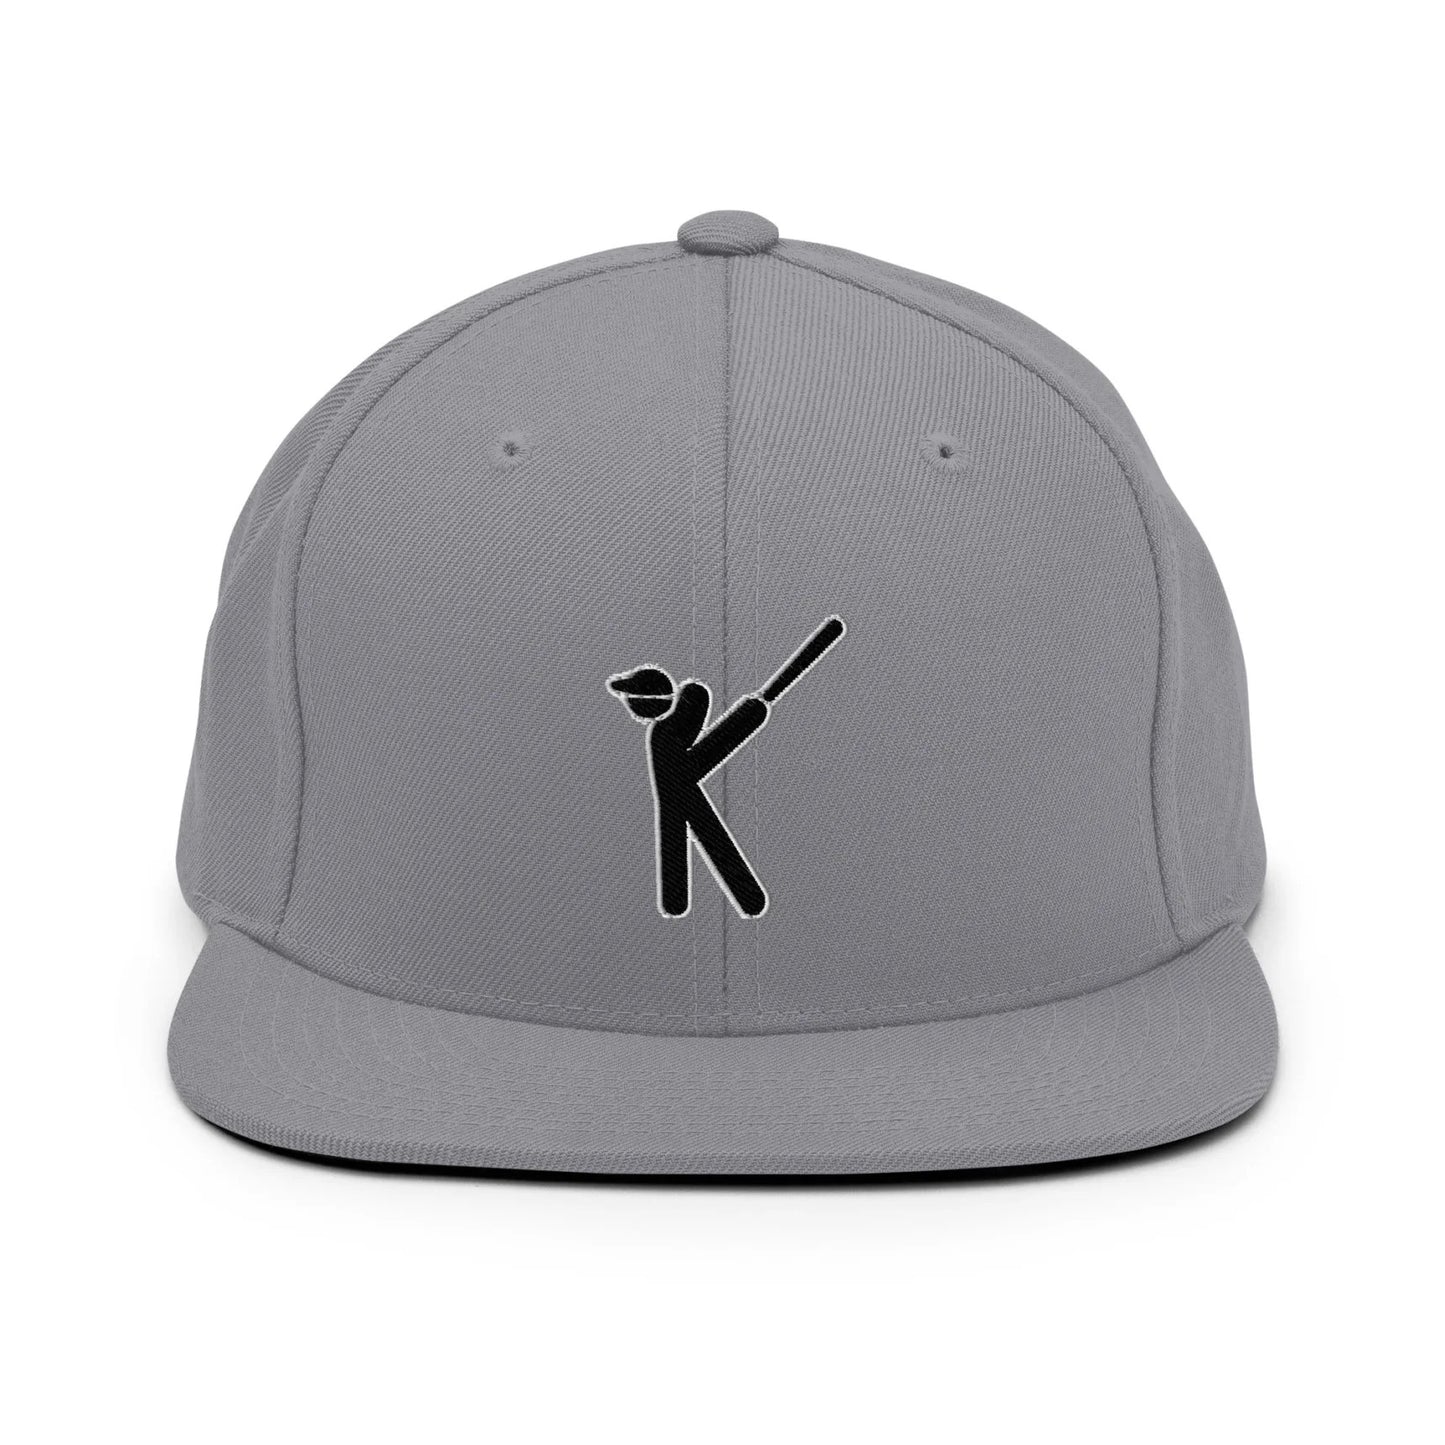 Kasabe ShowZone snapback hat in grey